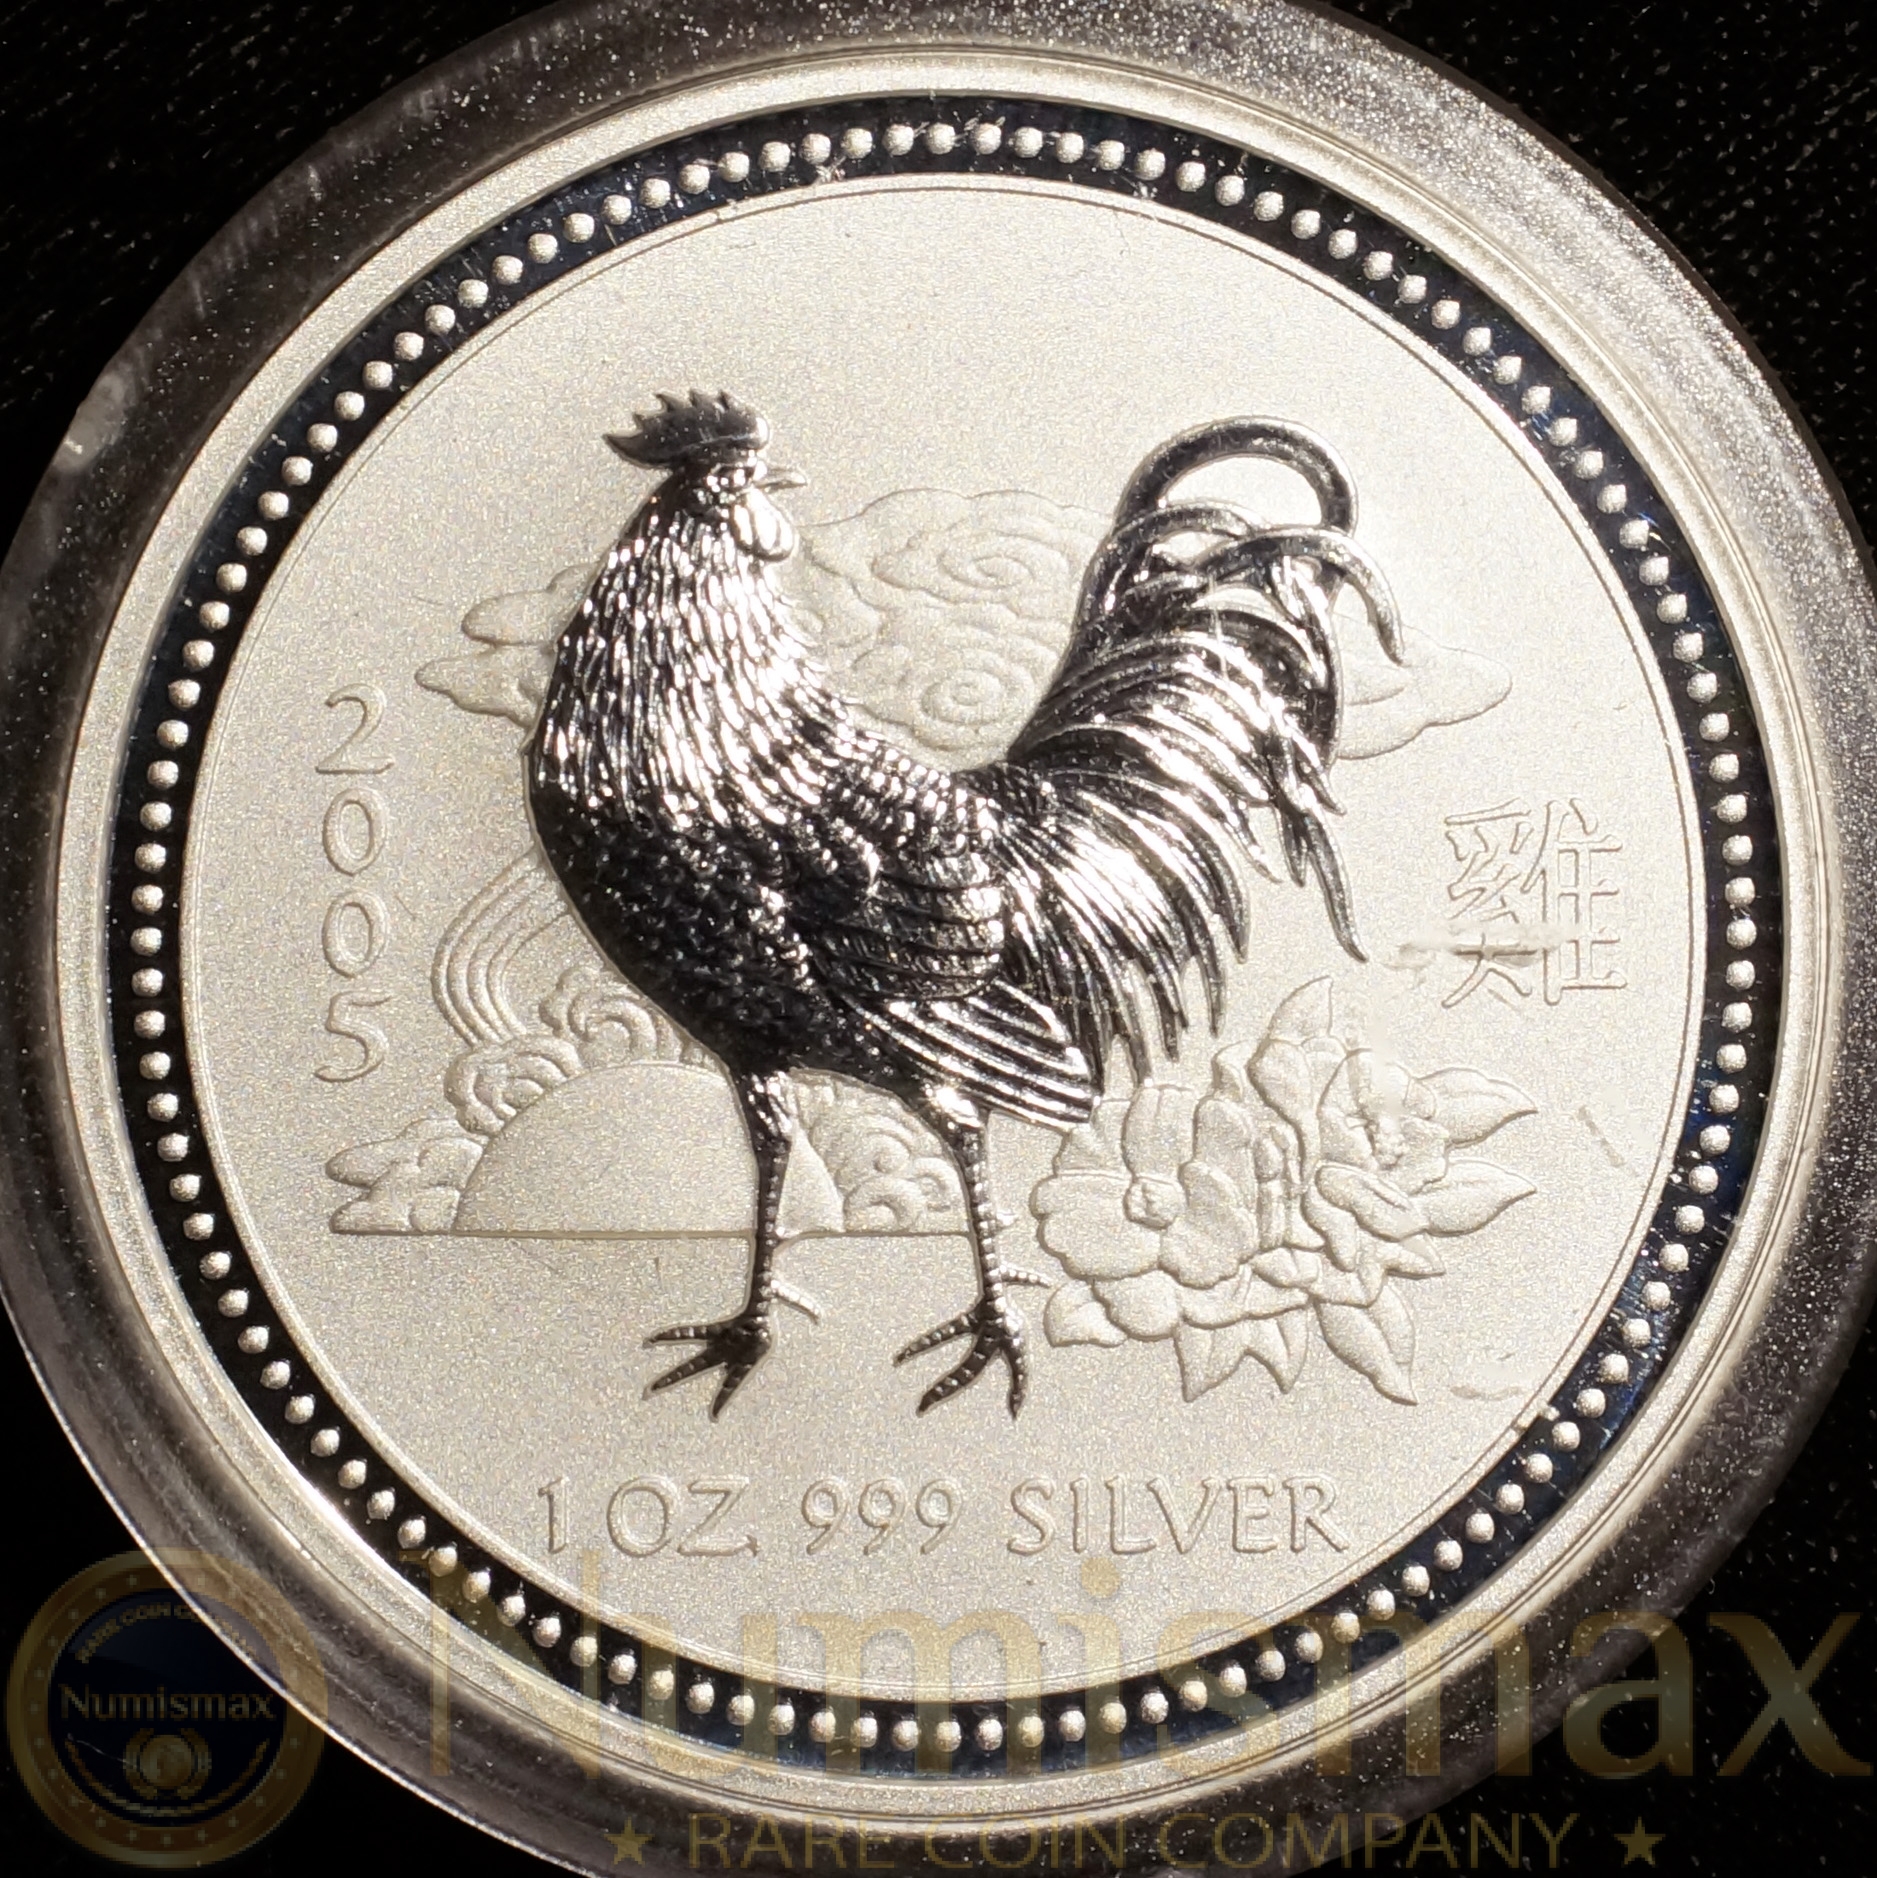 2005 Australia $1 Silver Lunar Rooster - Numismax